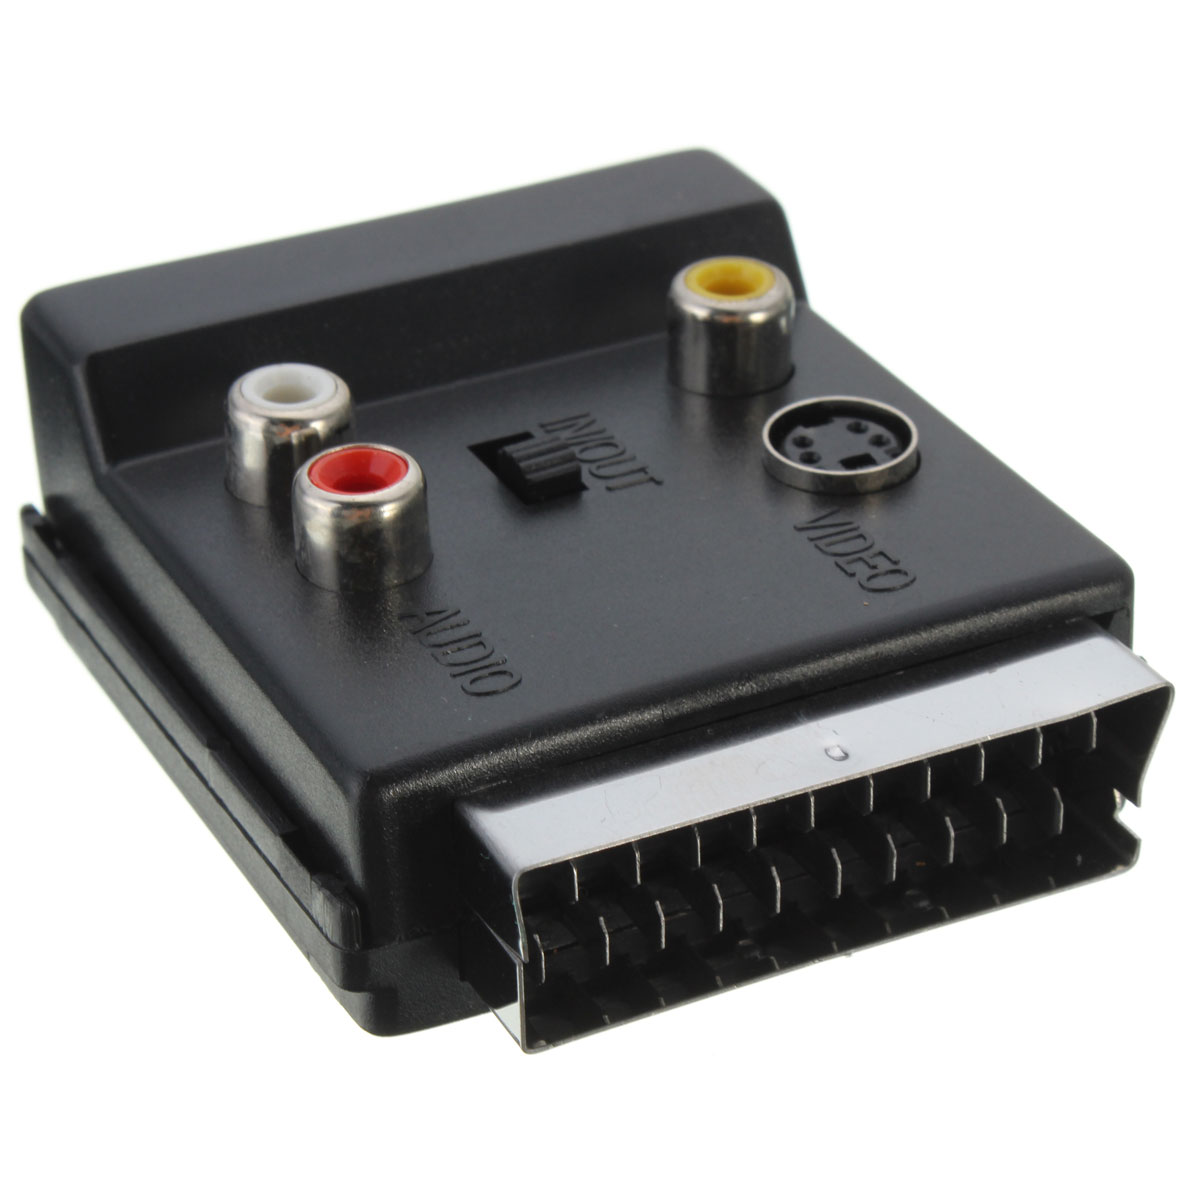 

Switchable Scart Male to Scart Женский S-Video 3 RCA Audio Adapter Converter Коннектор